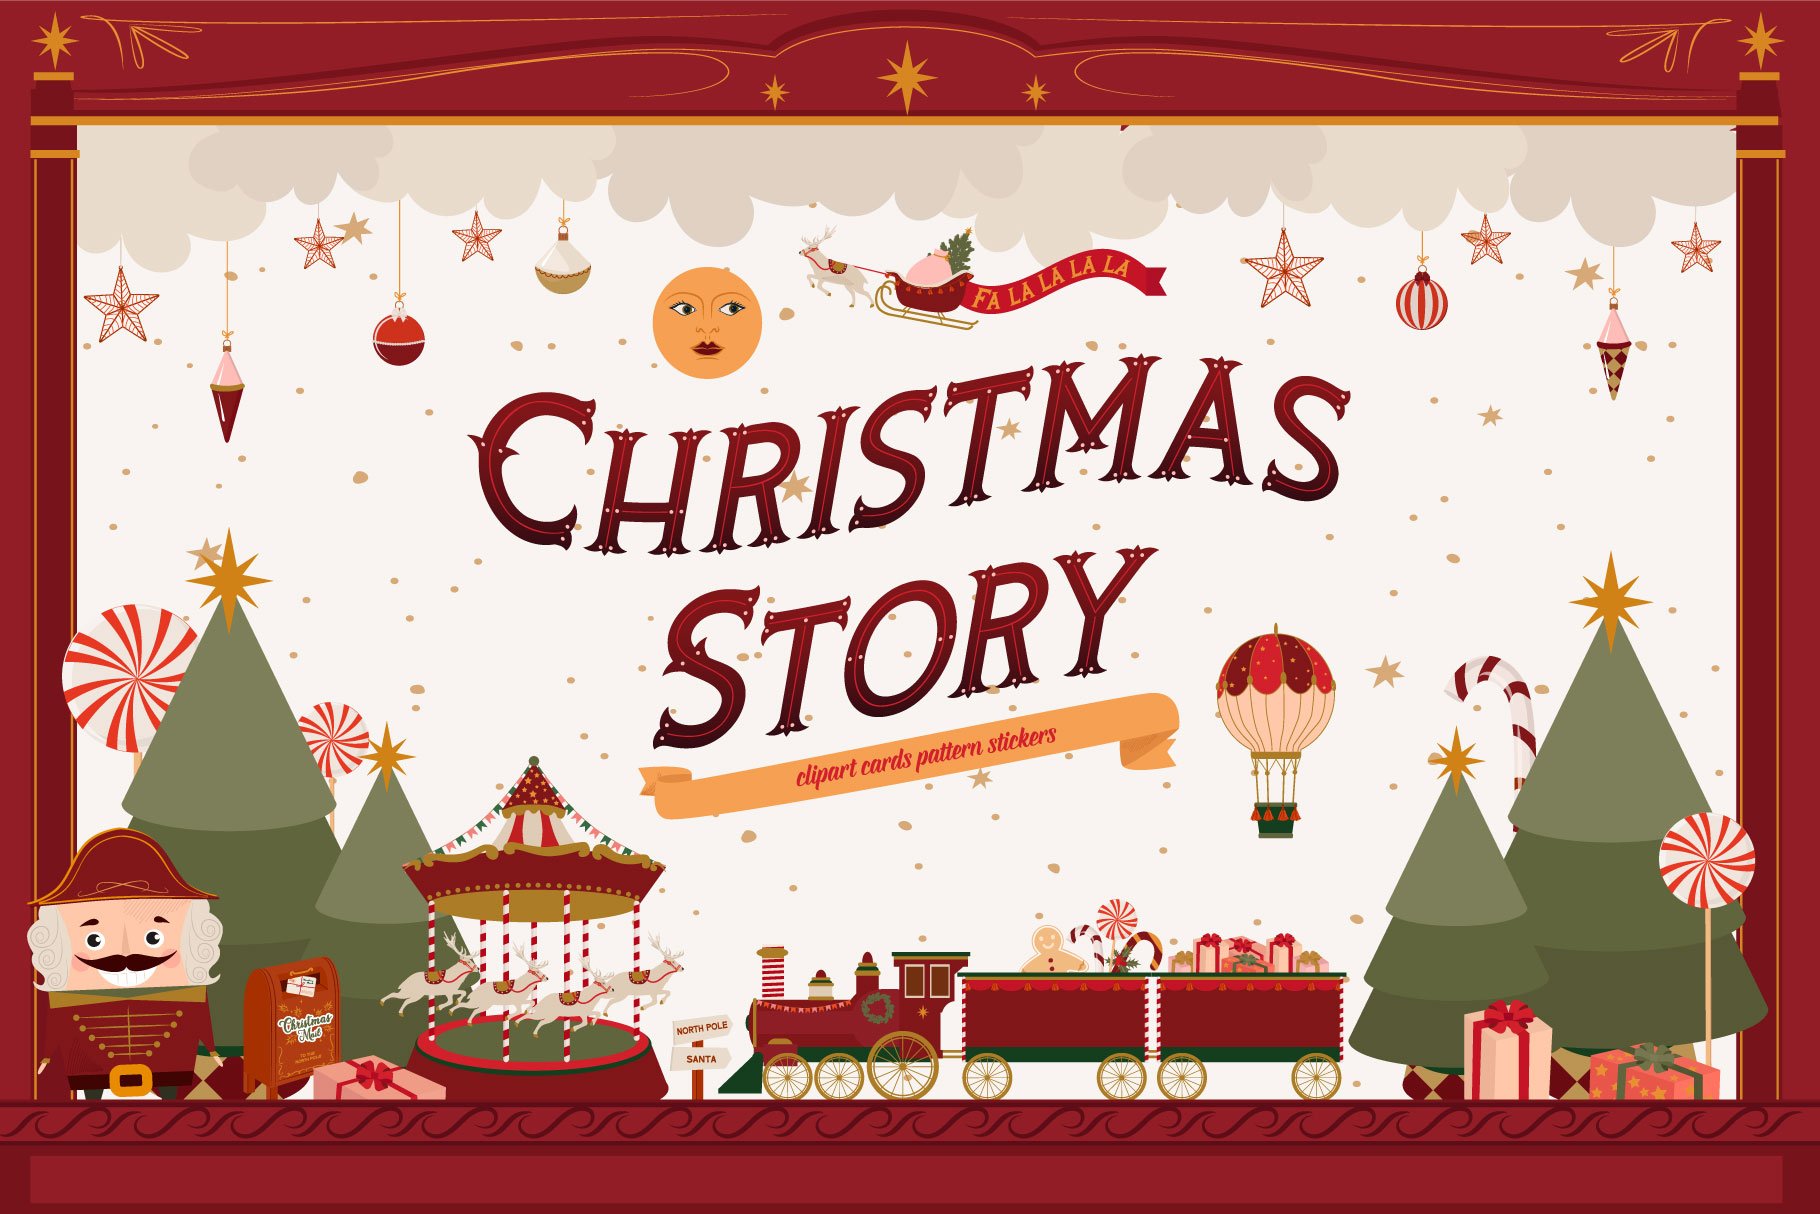 Christmas Story cover image.